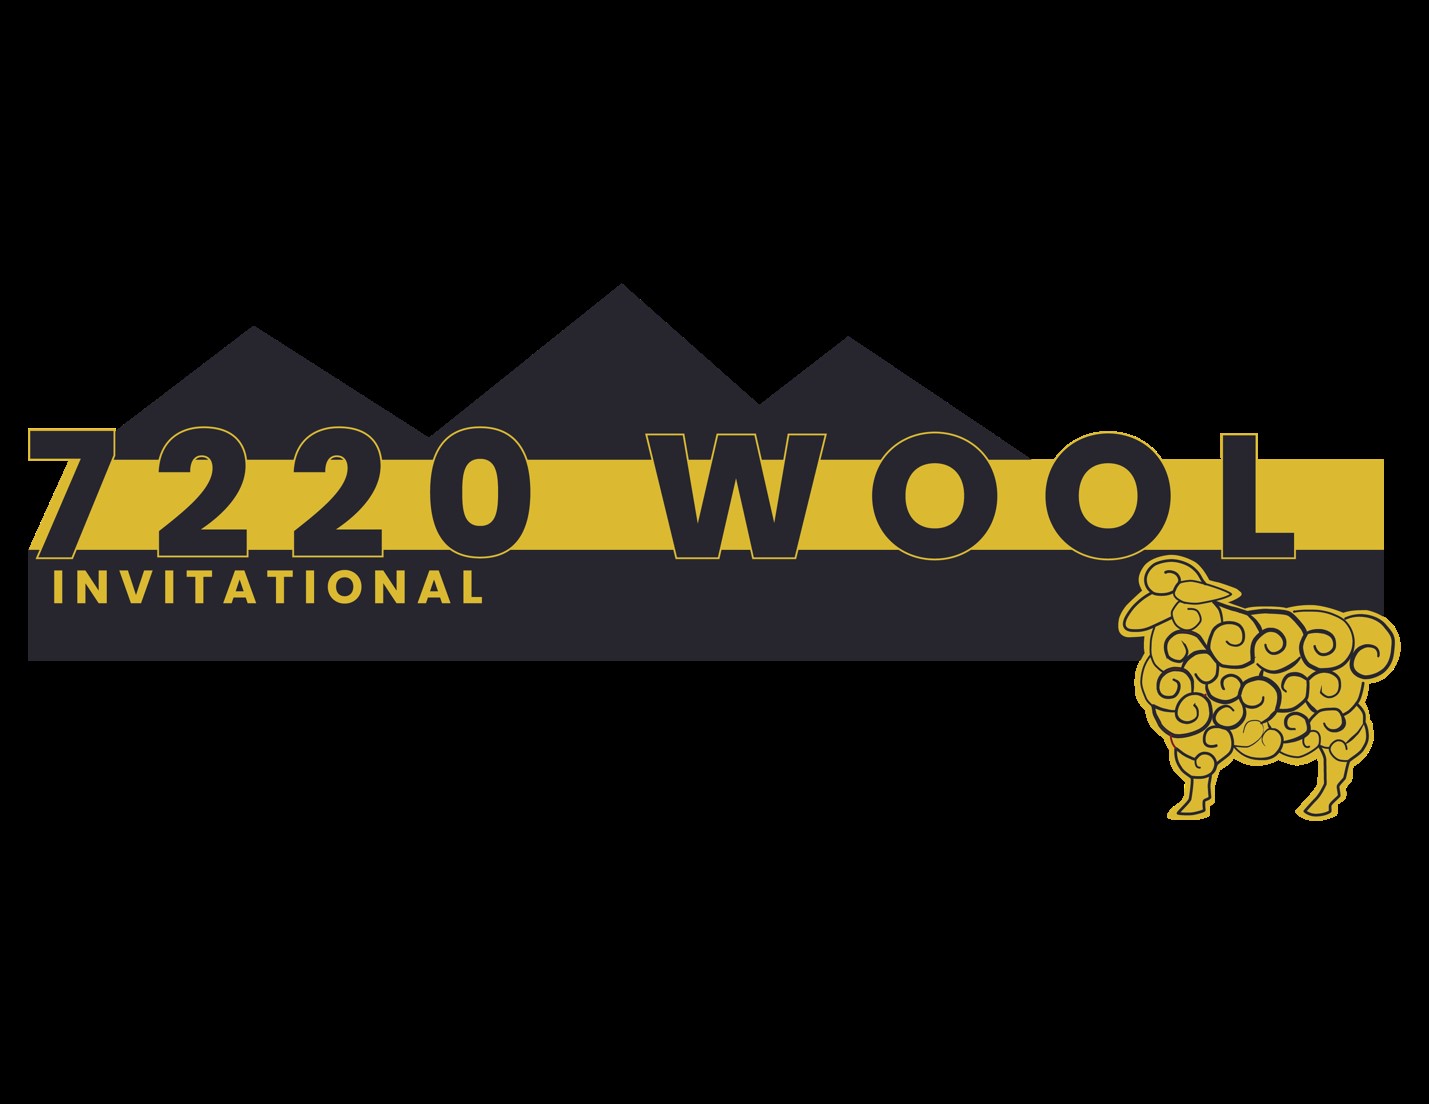 7220 wool Invitational logo